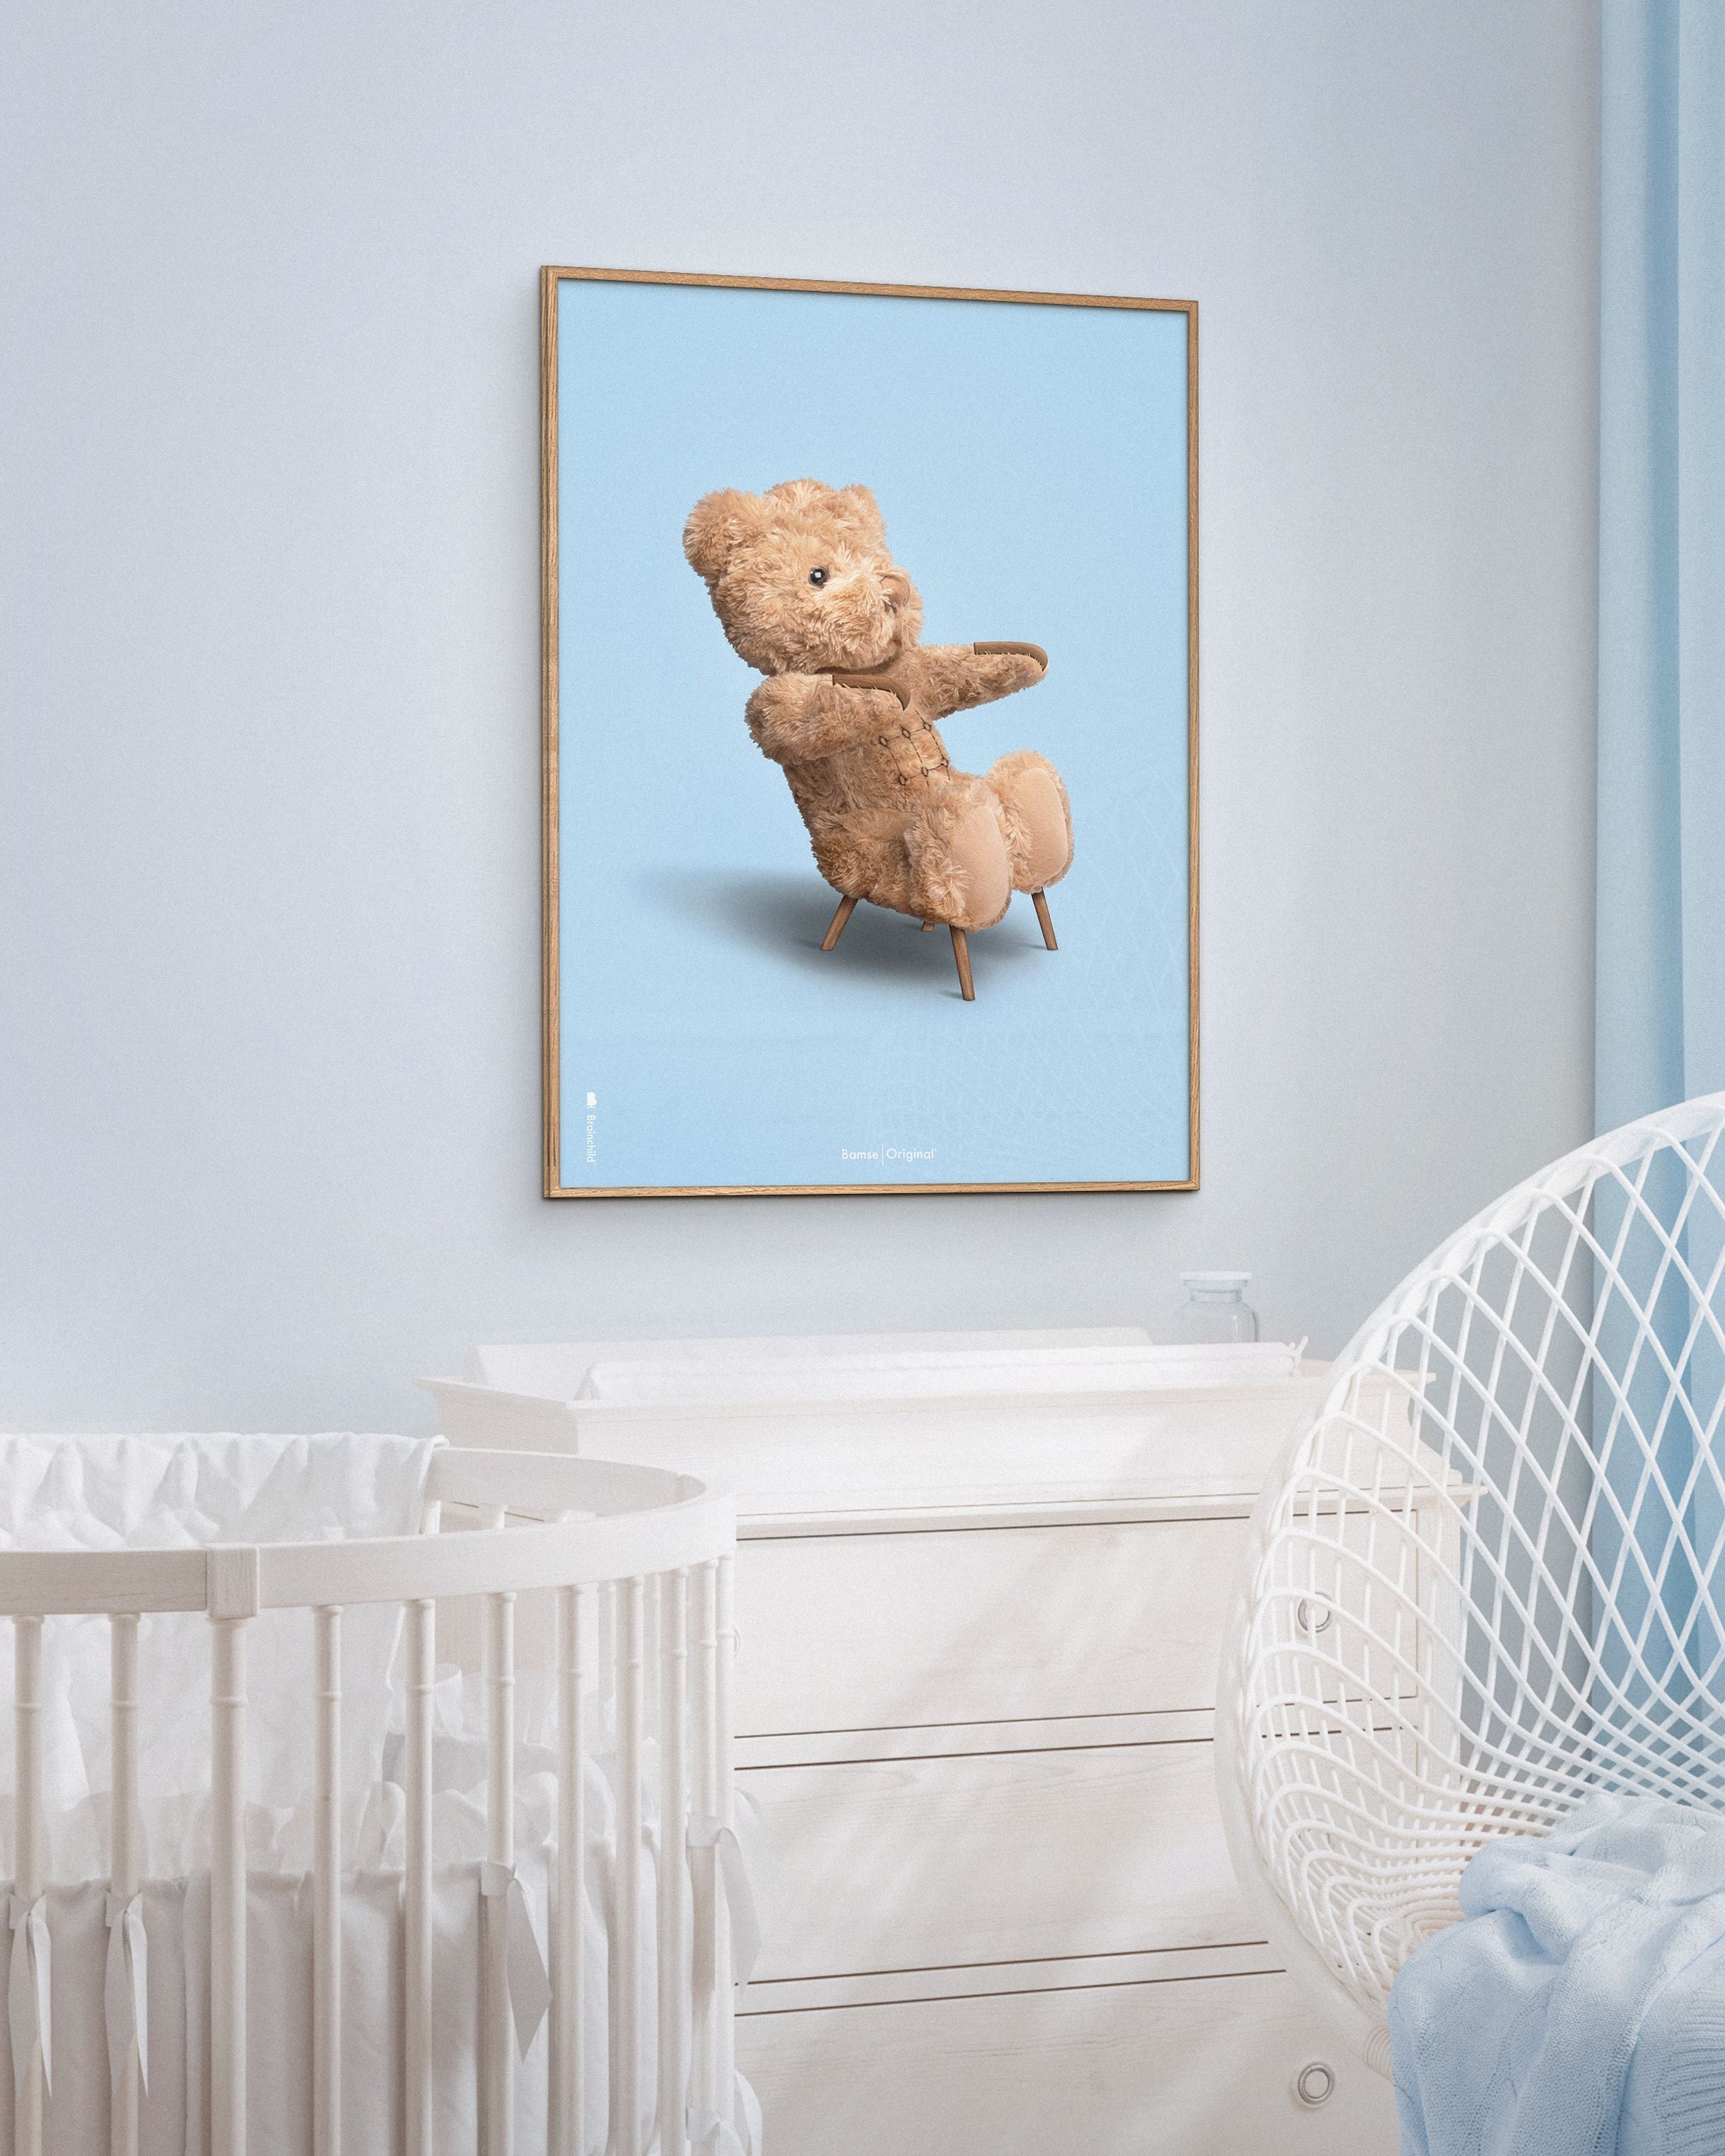 Brainchild Teddy Bear Classic Poster Frame Made Of Light Wood Ramme 50x70 Cm, Light Blue Background